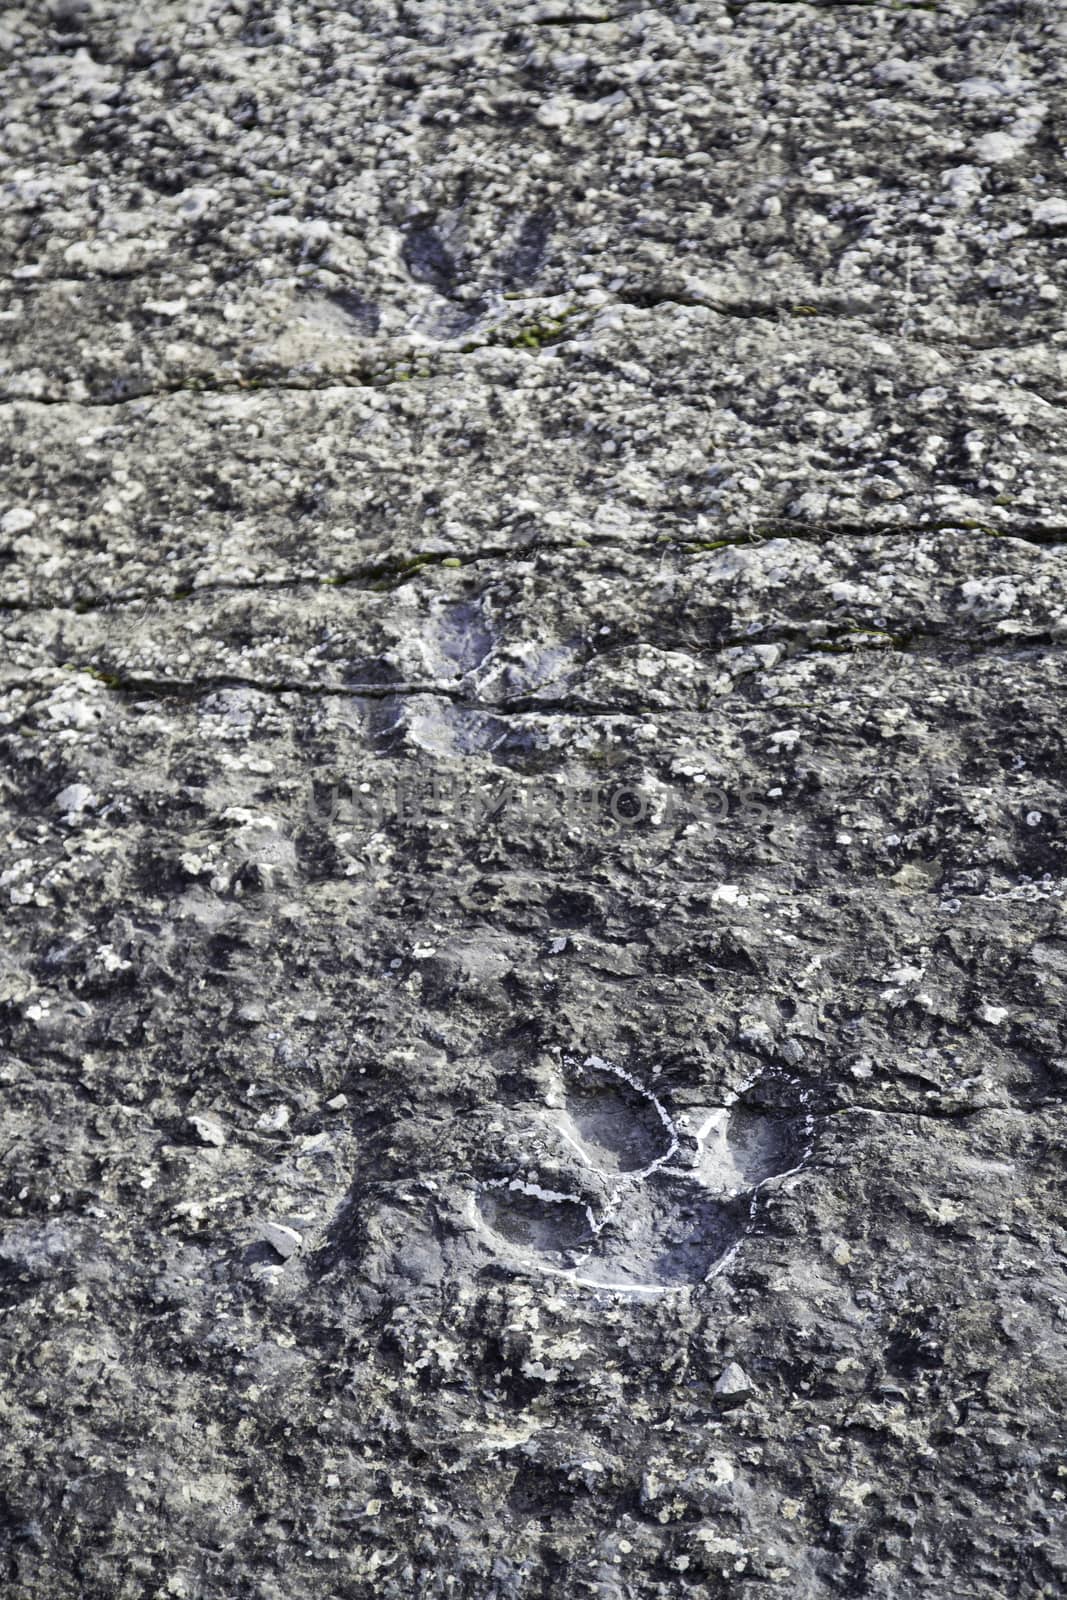 Dinosaur fossil footprints, detail of ancient prehistoric animal tracks, animal extinct